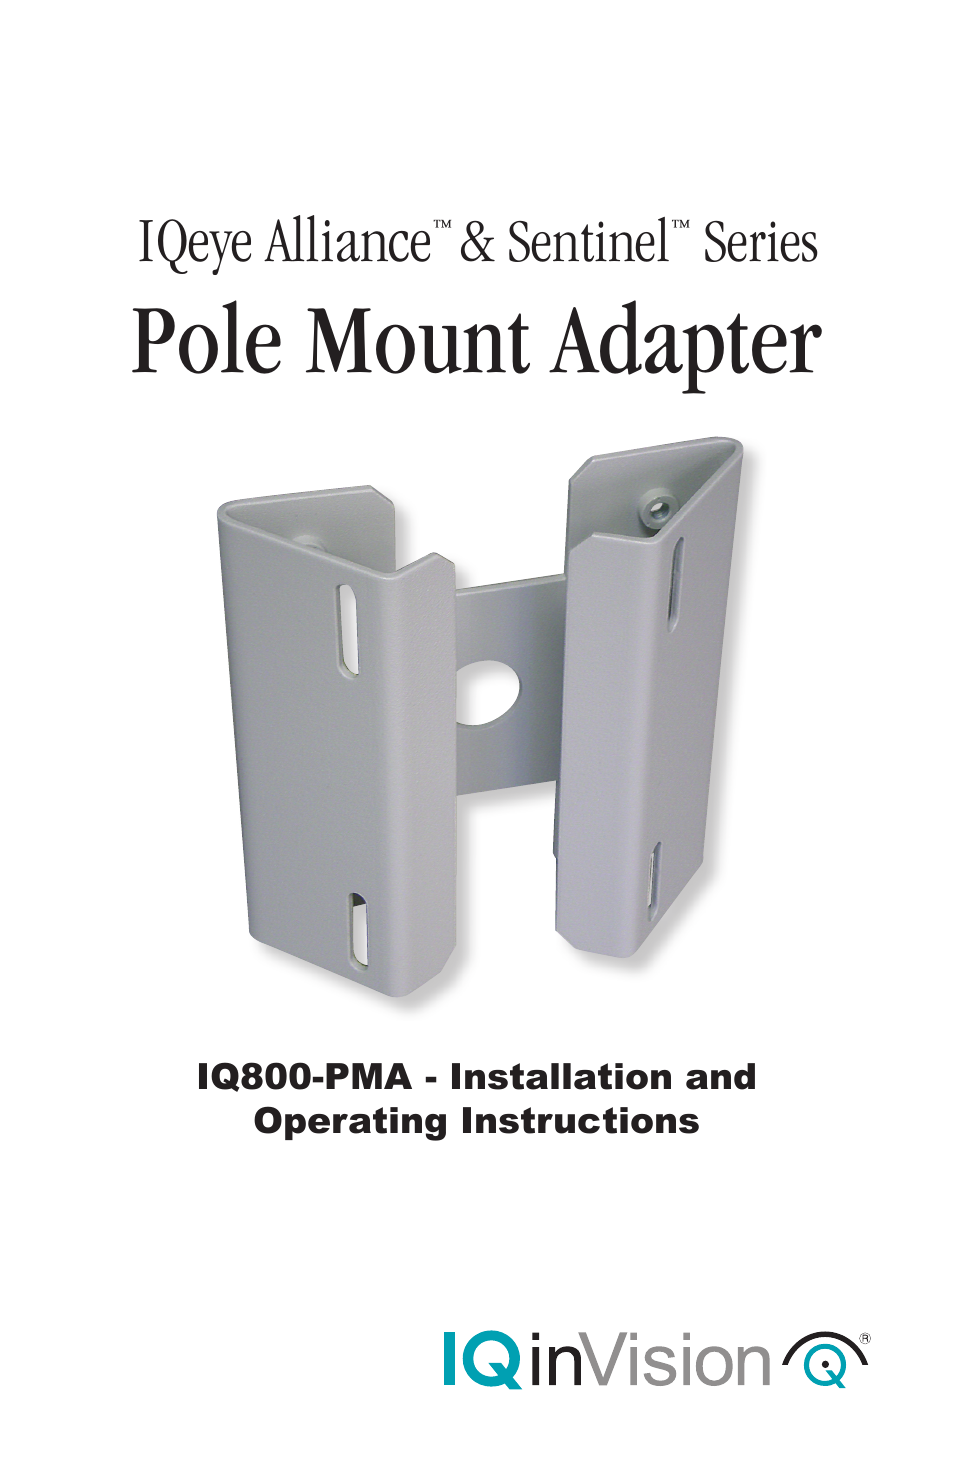 Alliance & Sentinel Series Pole Mount Adaptor